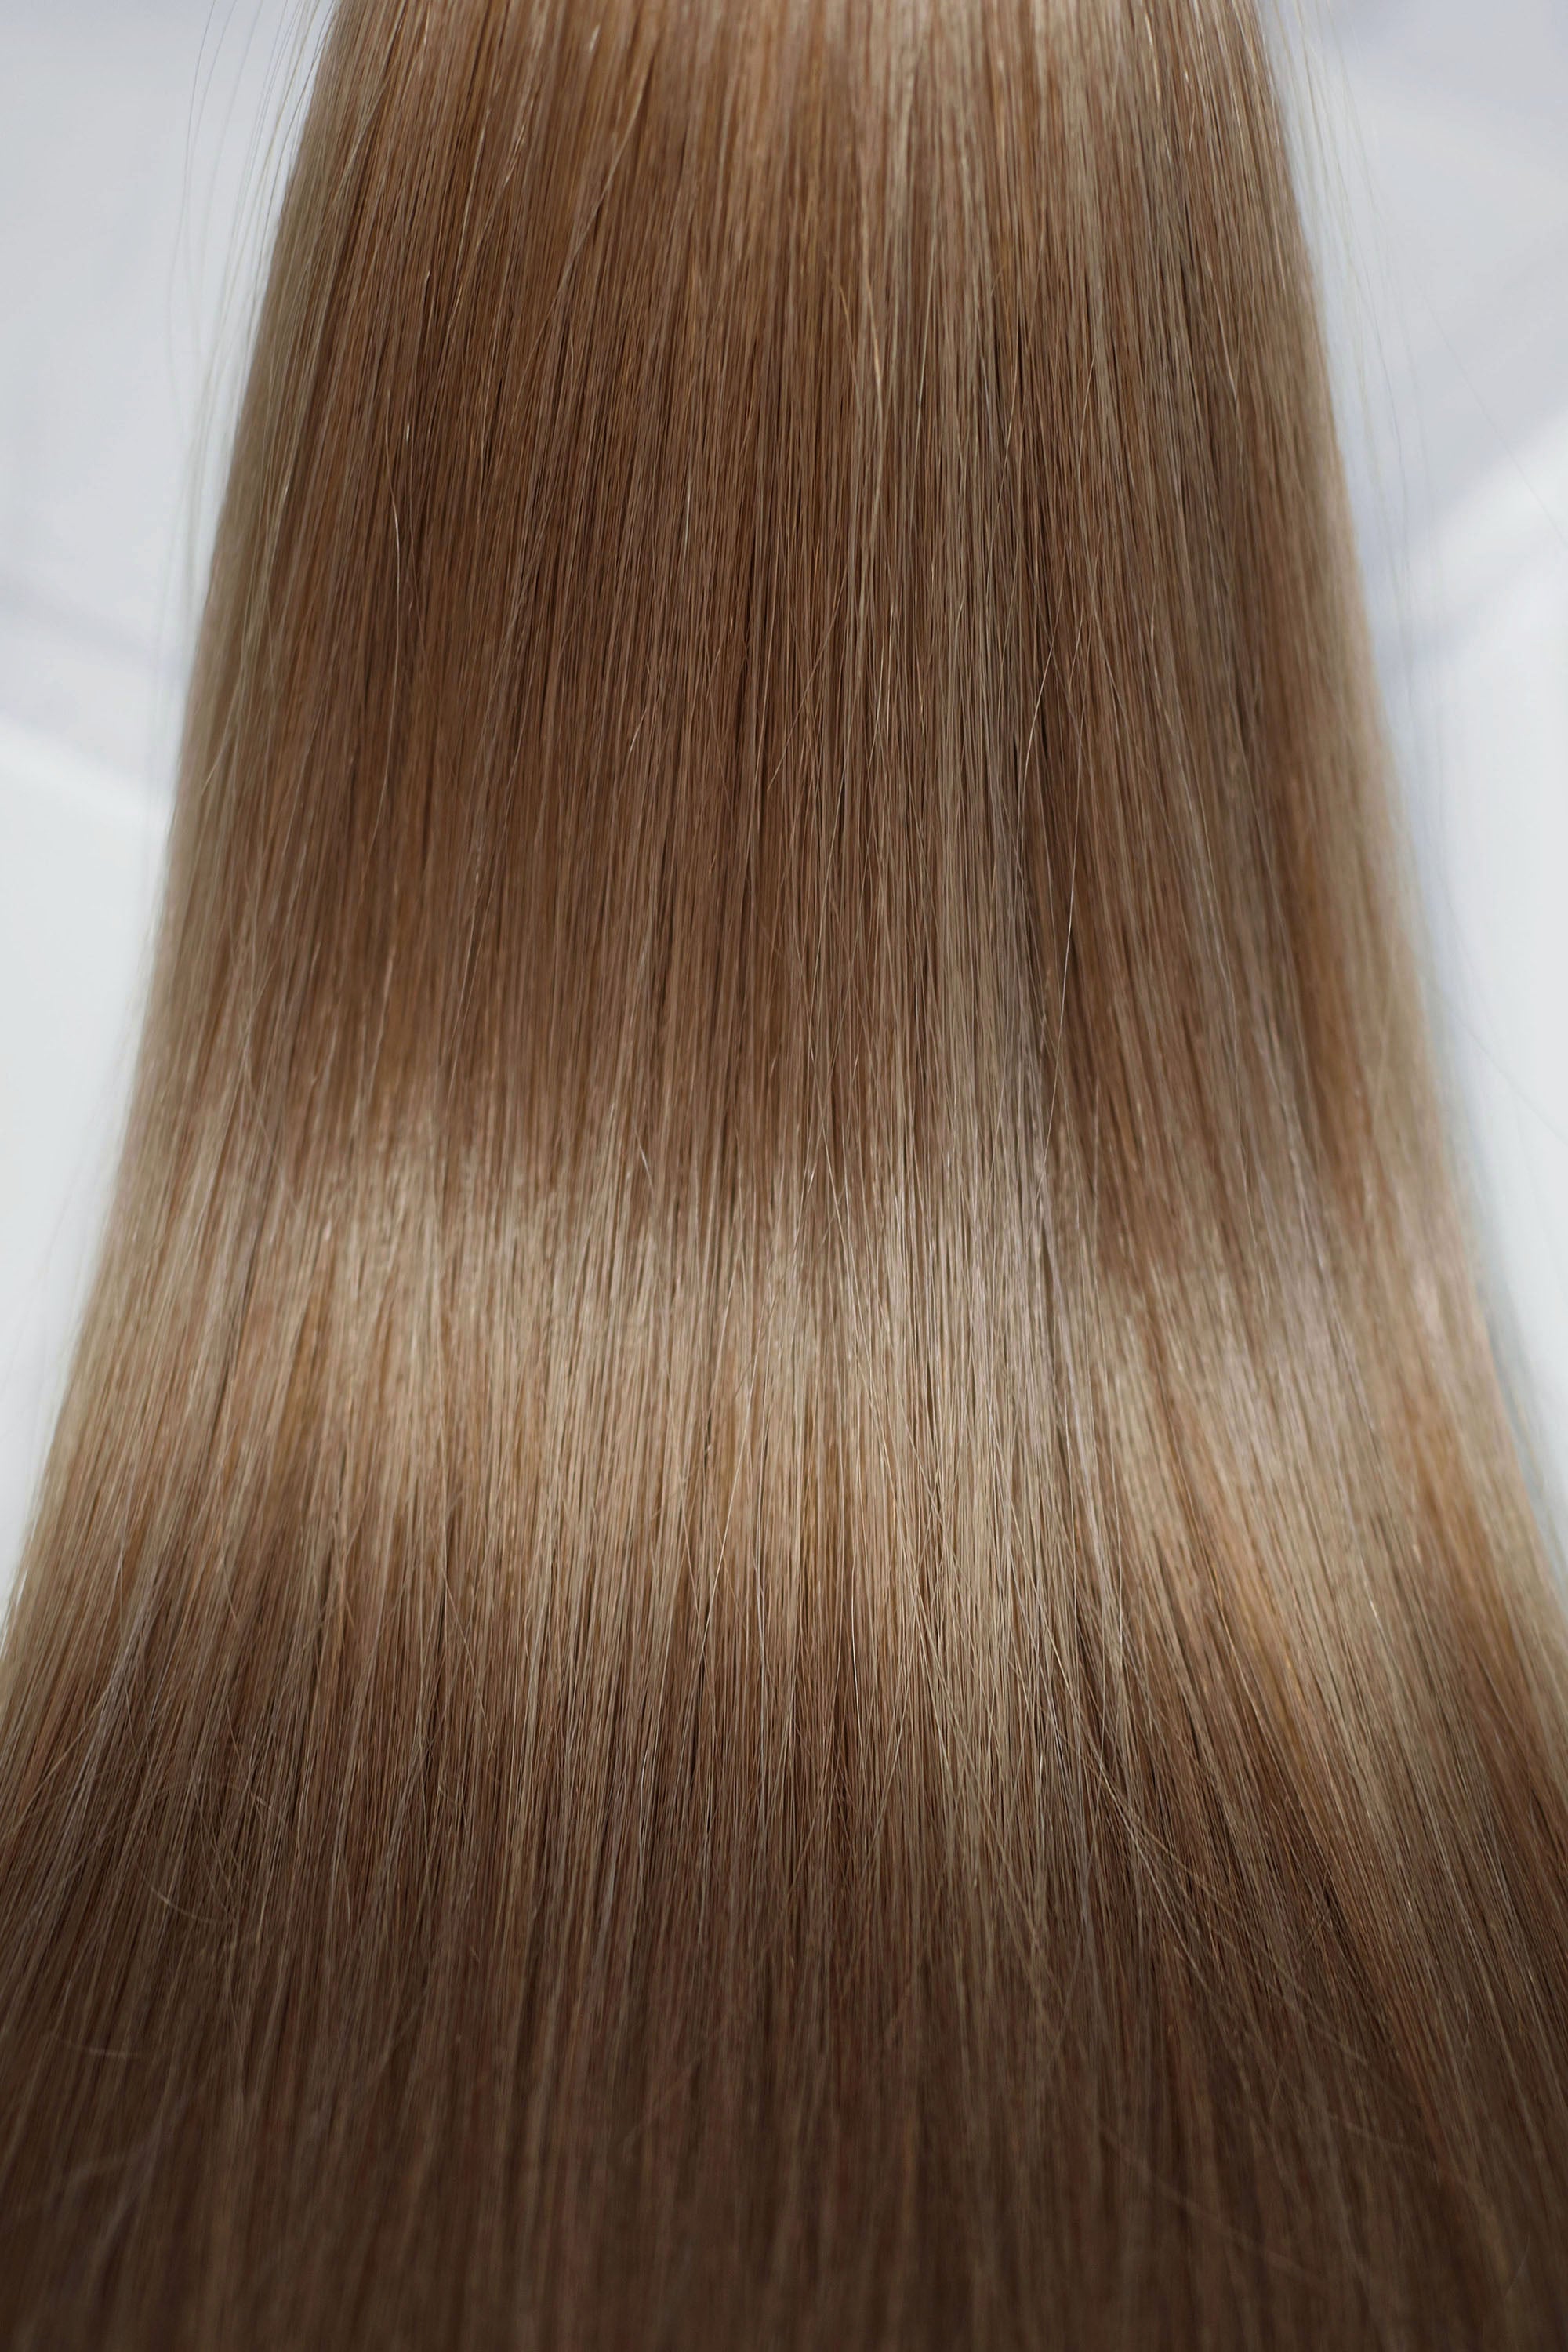 Behair professional Keratin Tip "Premium" 20" (50cm) Natural Straight Light Ash Brown #10 - 25g (1g each pcs) hair extensions